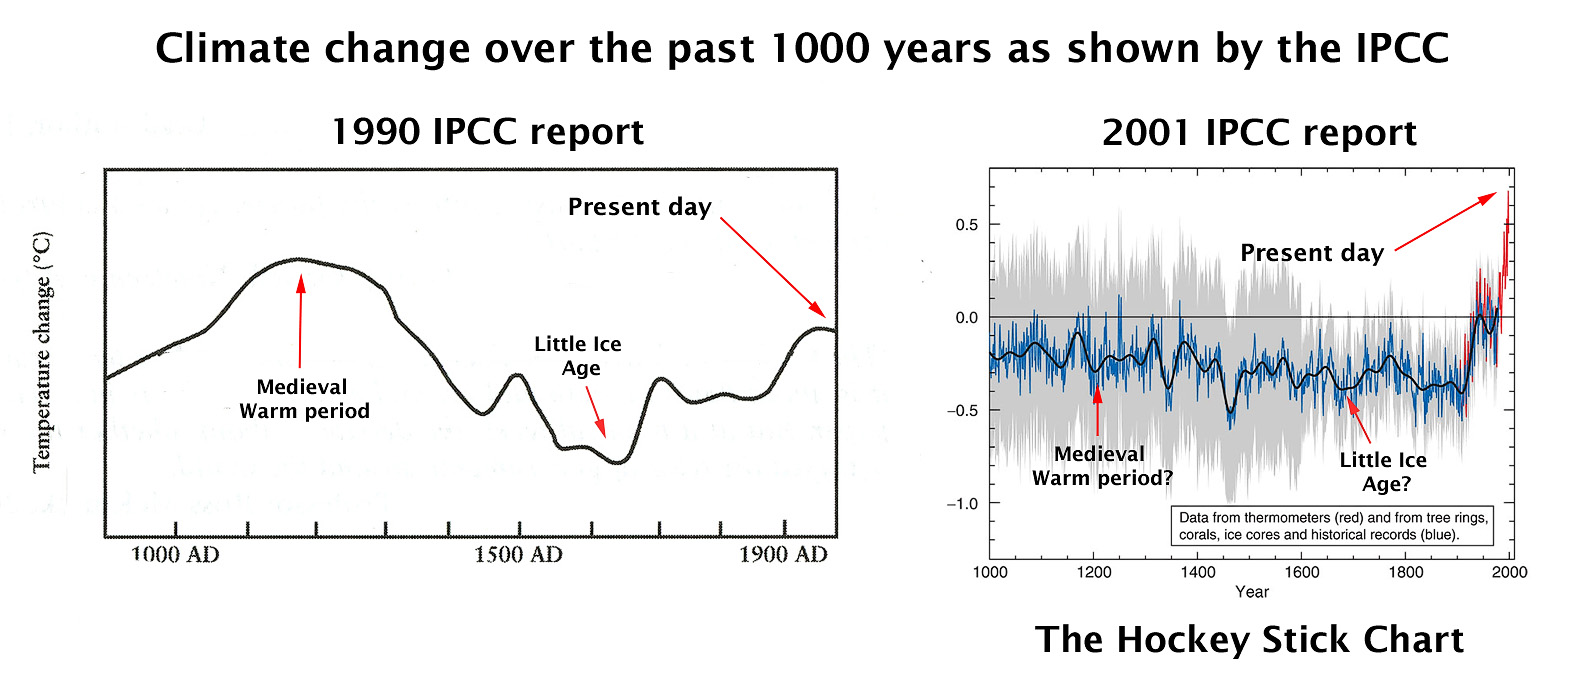 1990 versus 2001 IPCC climate change temperature charts